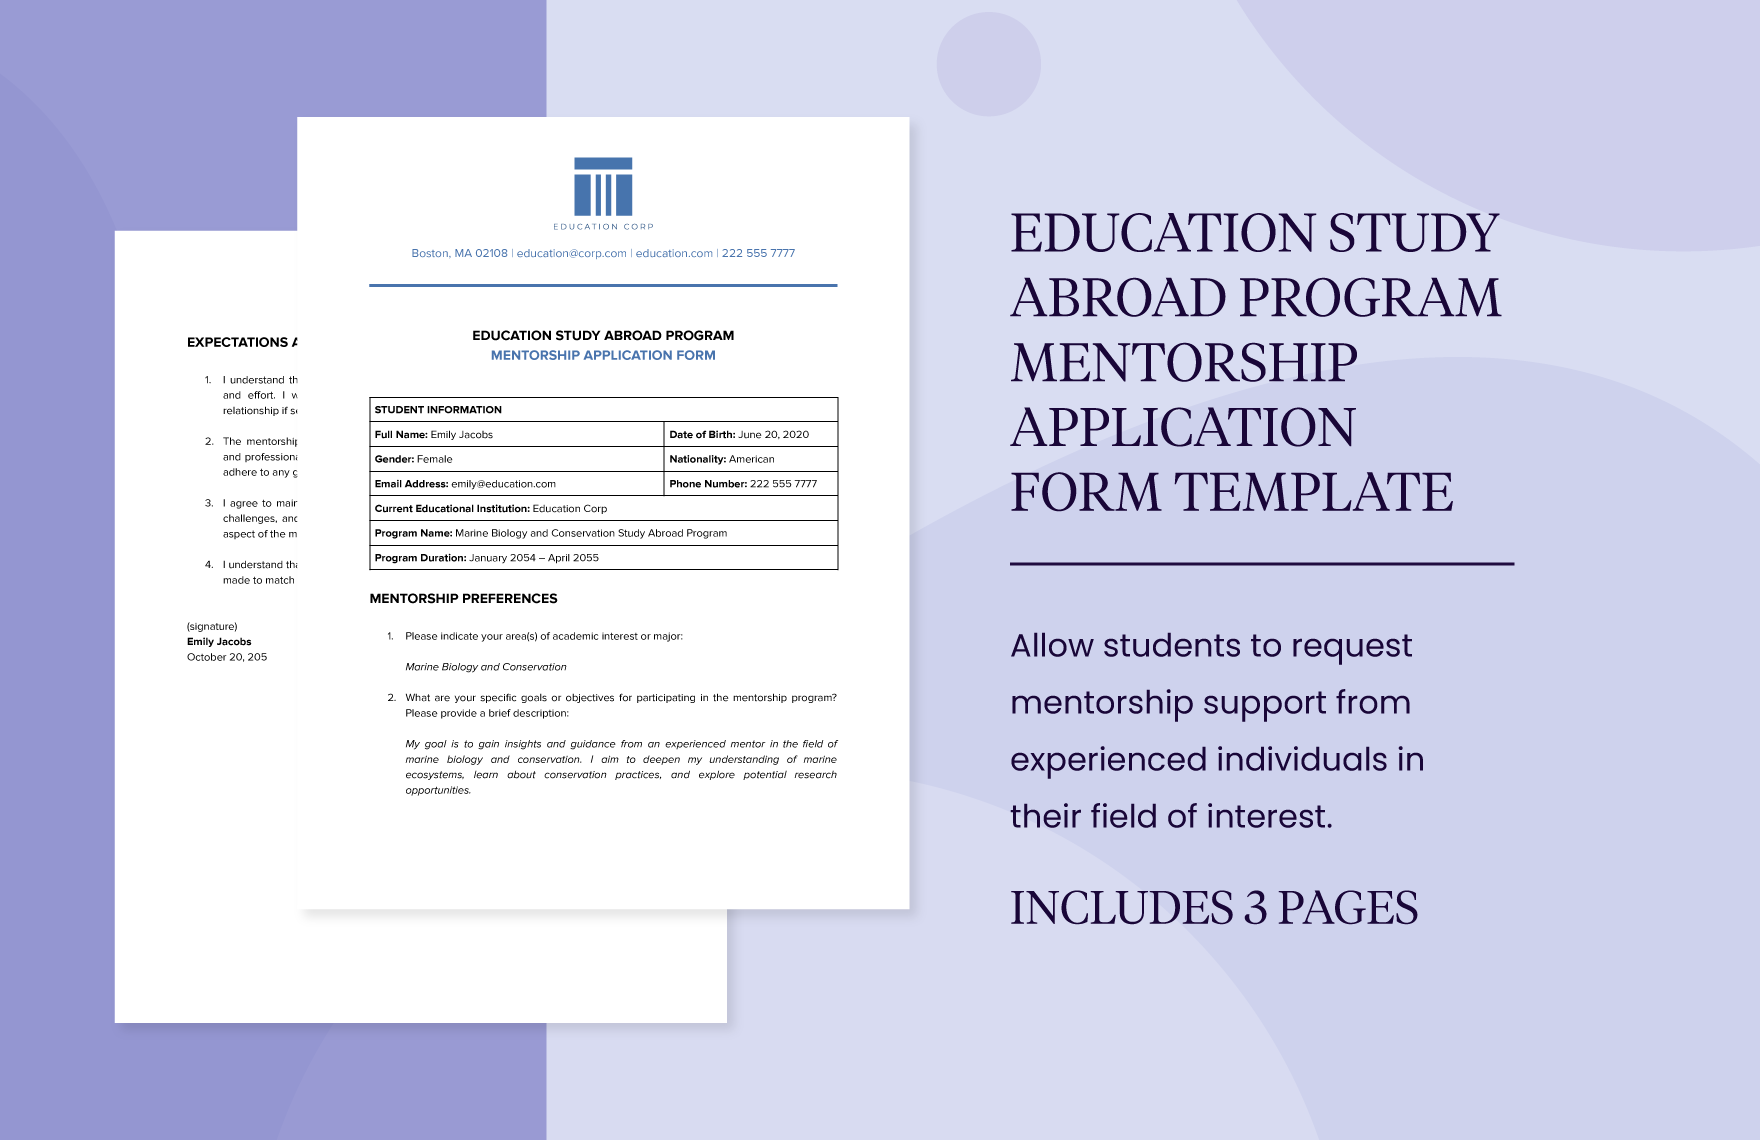 Education Study Abroad Program Mentorship Application Form Template in Word, Google Docs, PDF